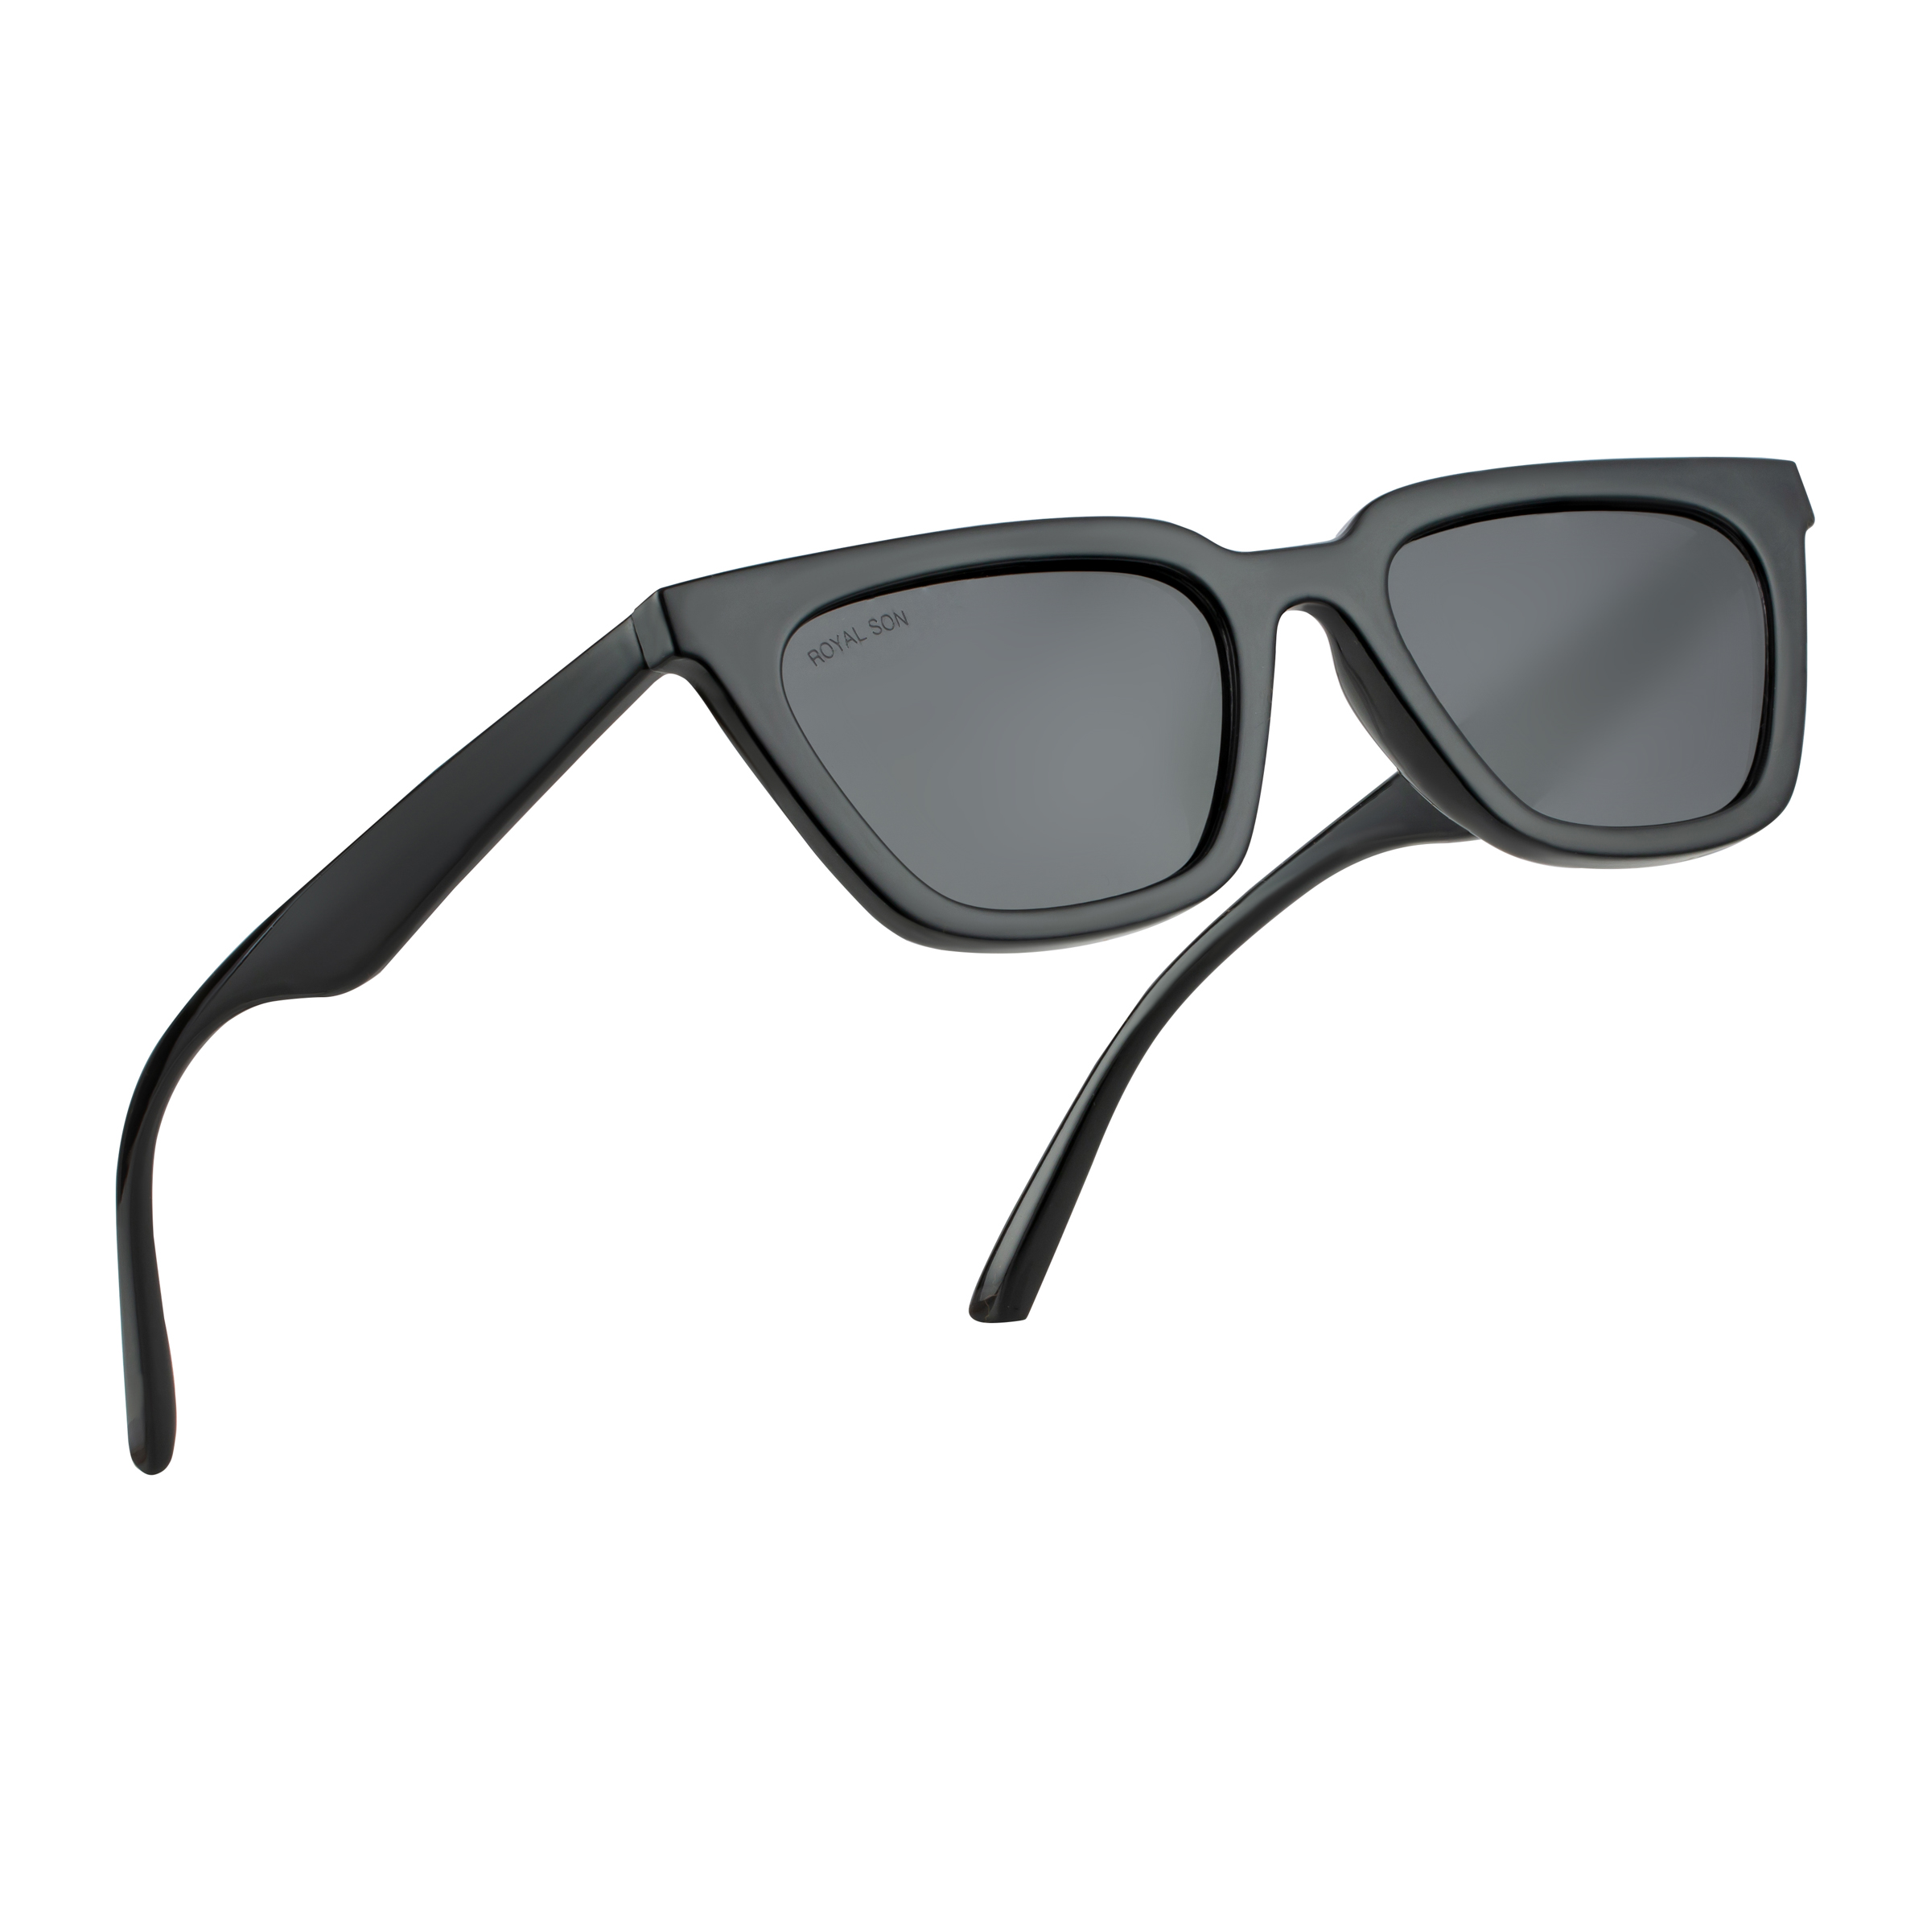 Royal Son UV400 Hd Dark Polarized Square Sunglasses for Men Women